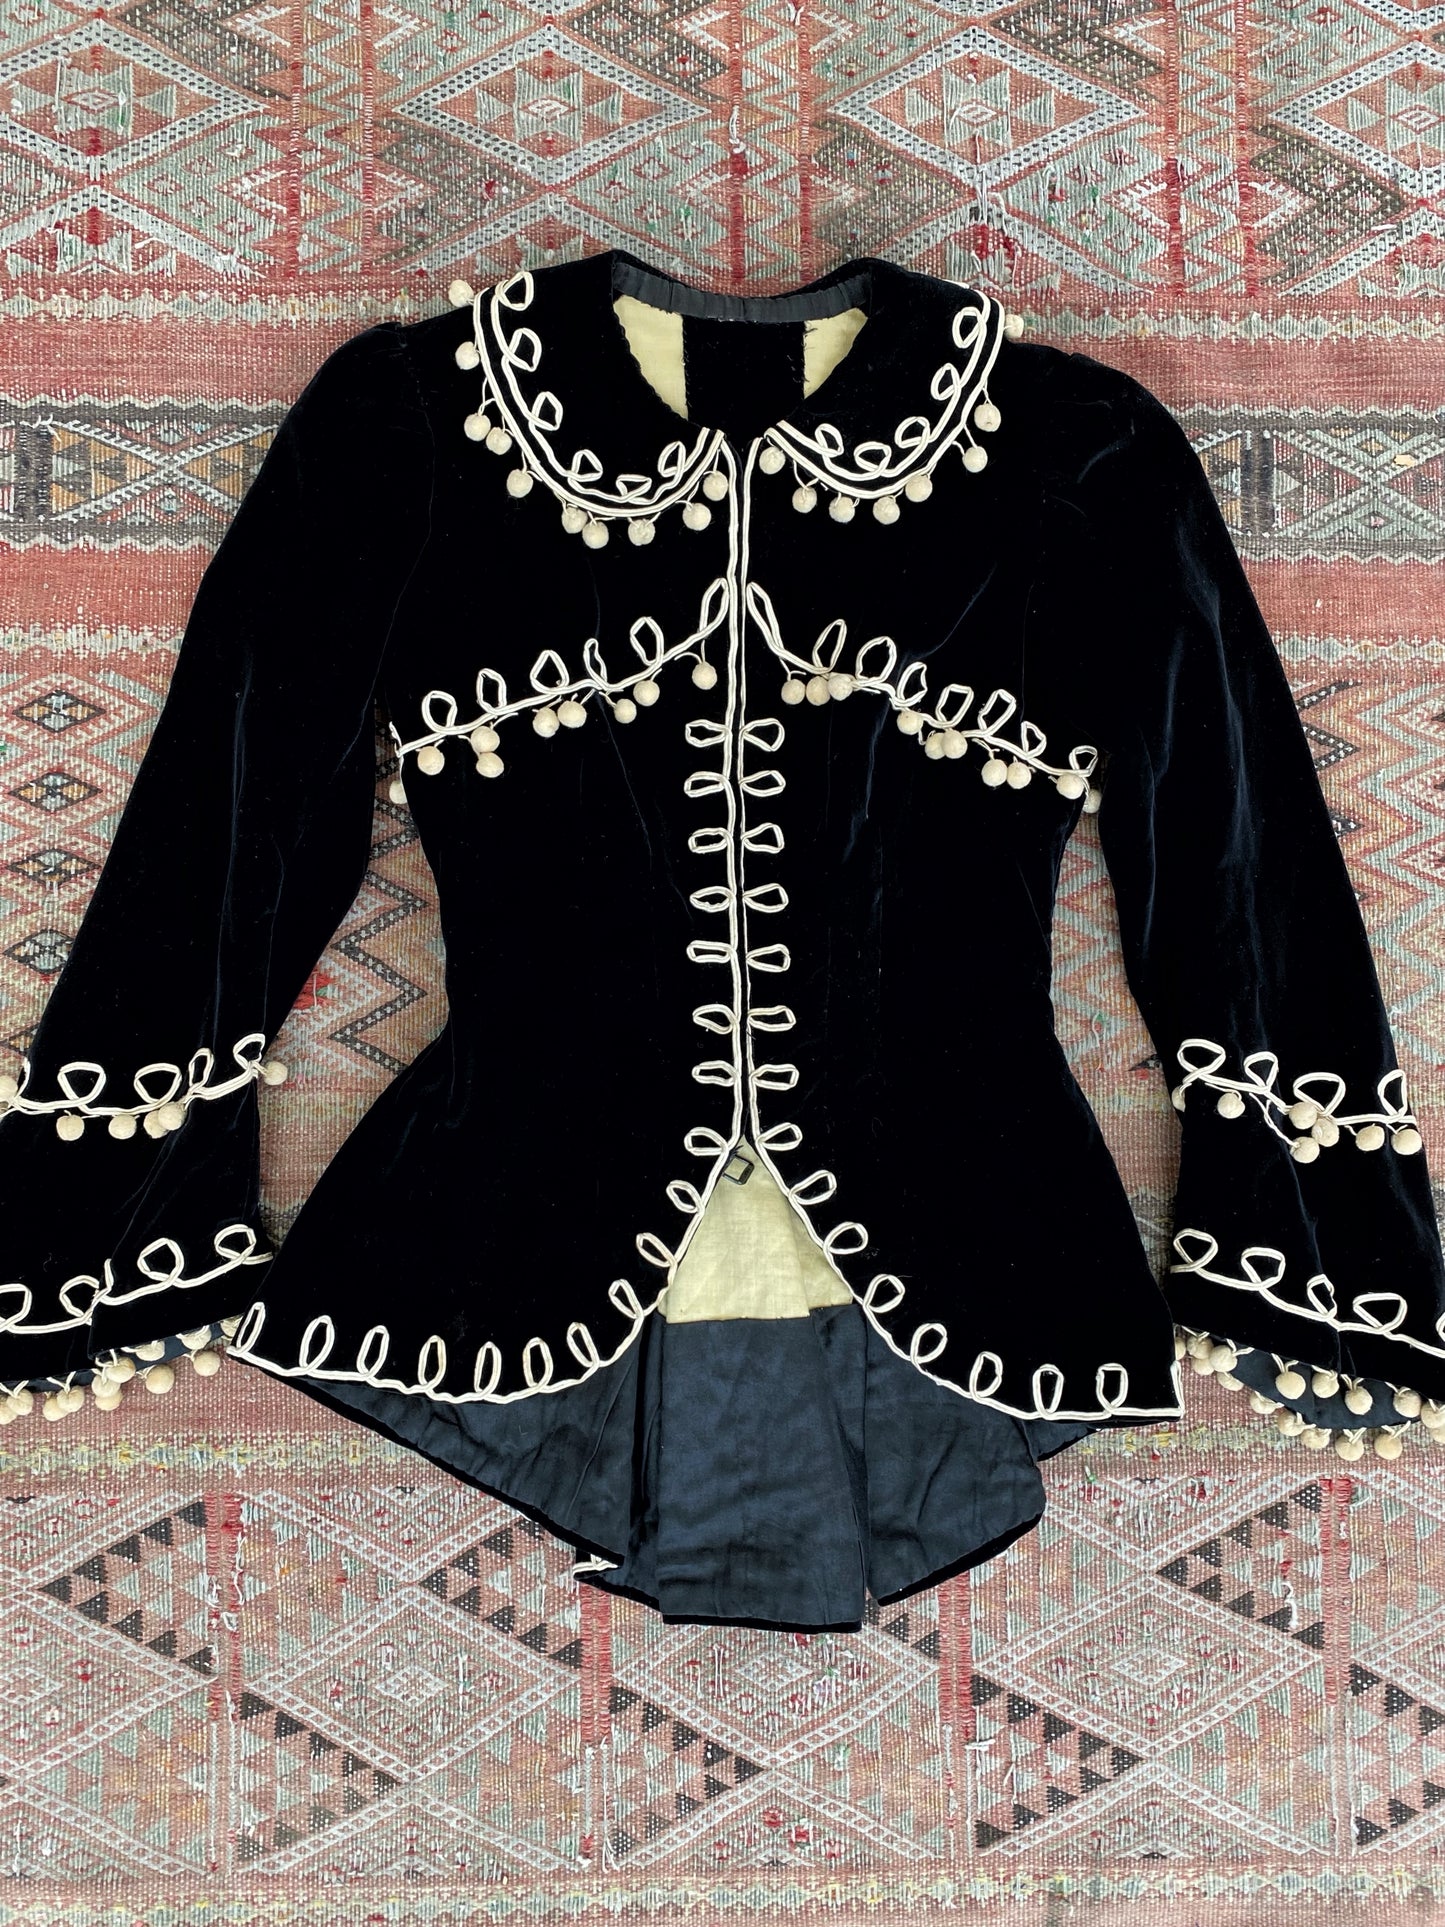 Victorian Black Velvet Tailored Jacket w/ Pom Poms and Peter Pan Collar- S